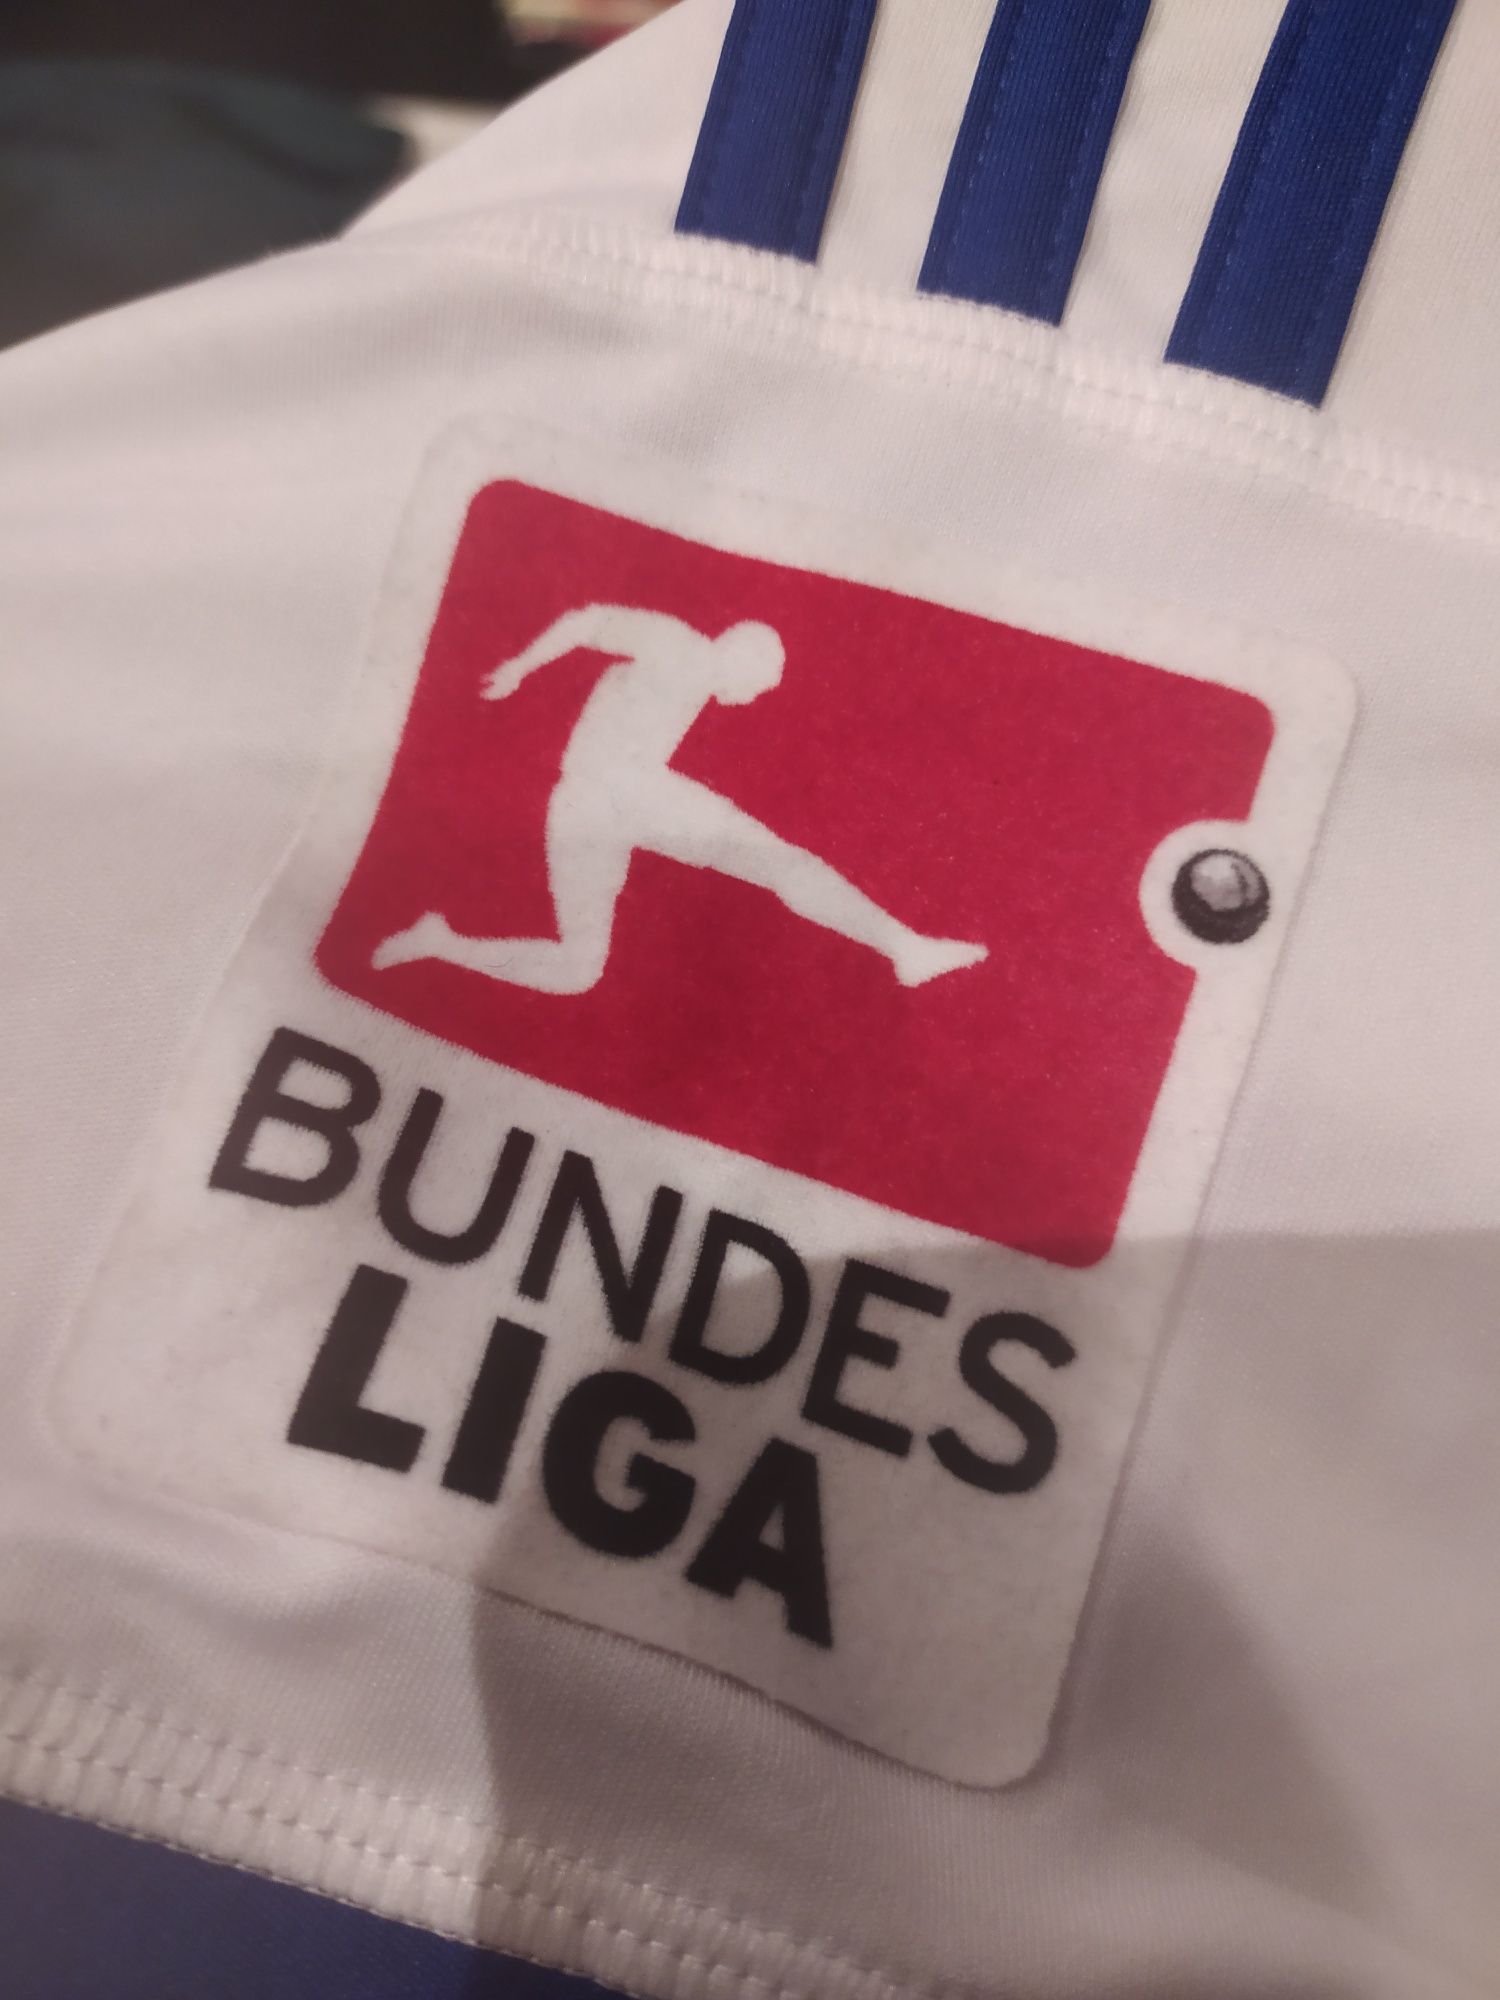 Calhanoglu. HSV Hamburg. Bundesliga. Adidas. Koszulka meczowa/jersey